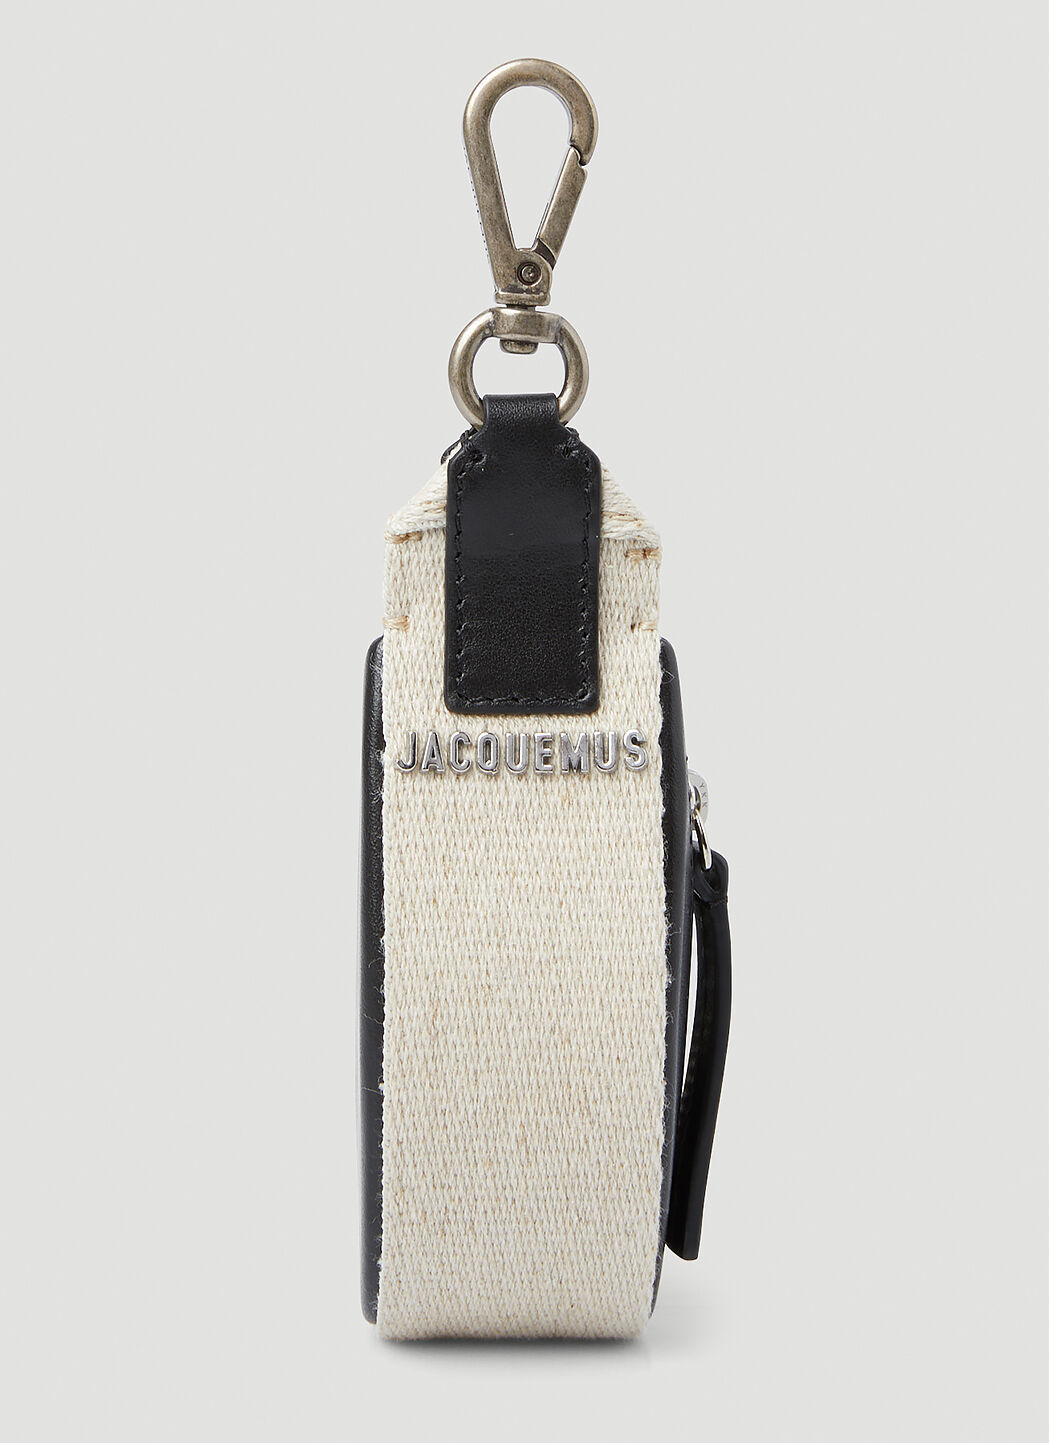 Jacquemus Le Peru Keychain in Black | LN-CC